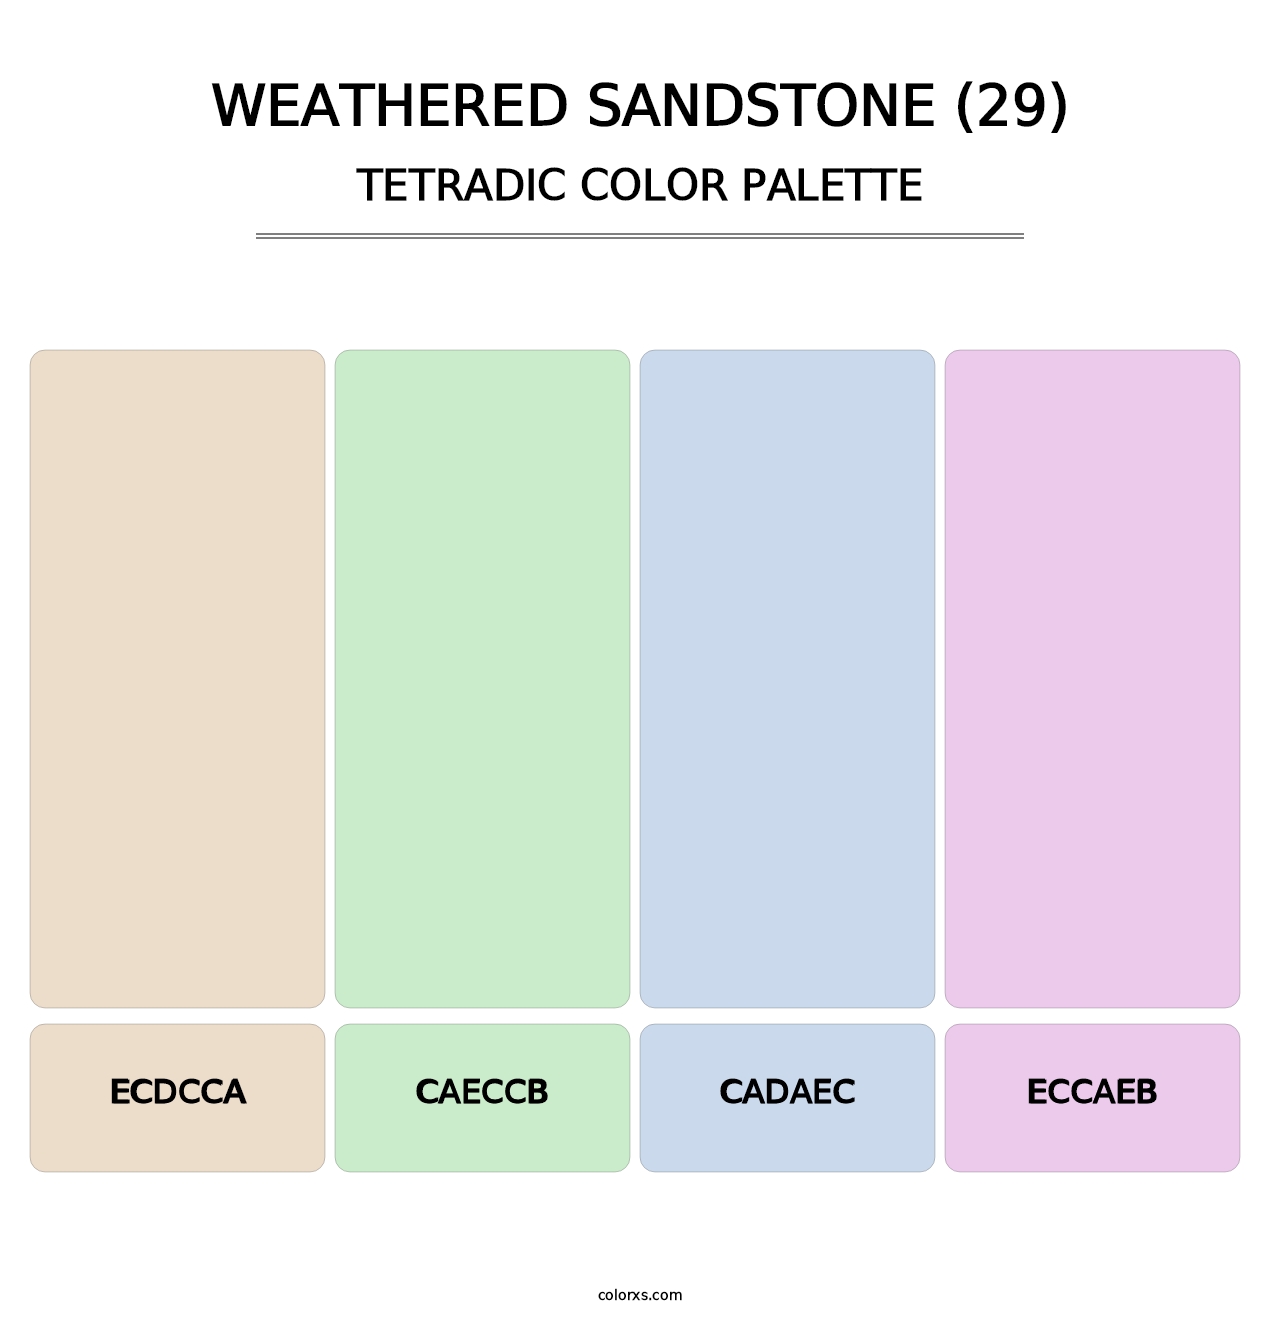 Weathered Sandstone (29) - Tetradic Color Palette